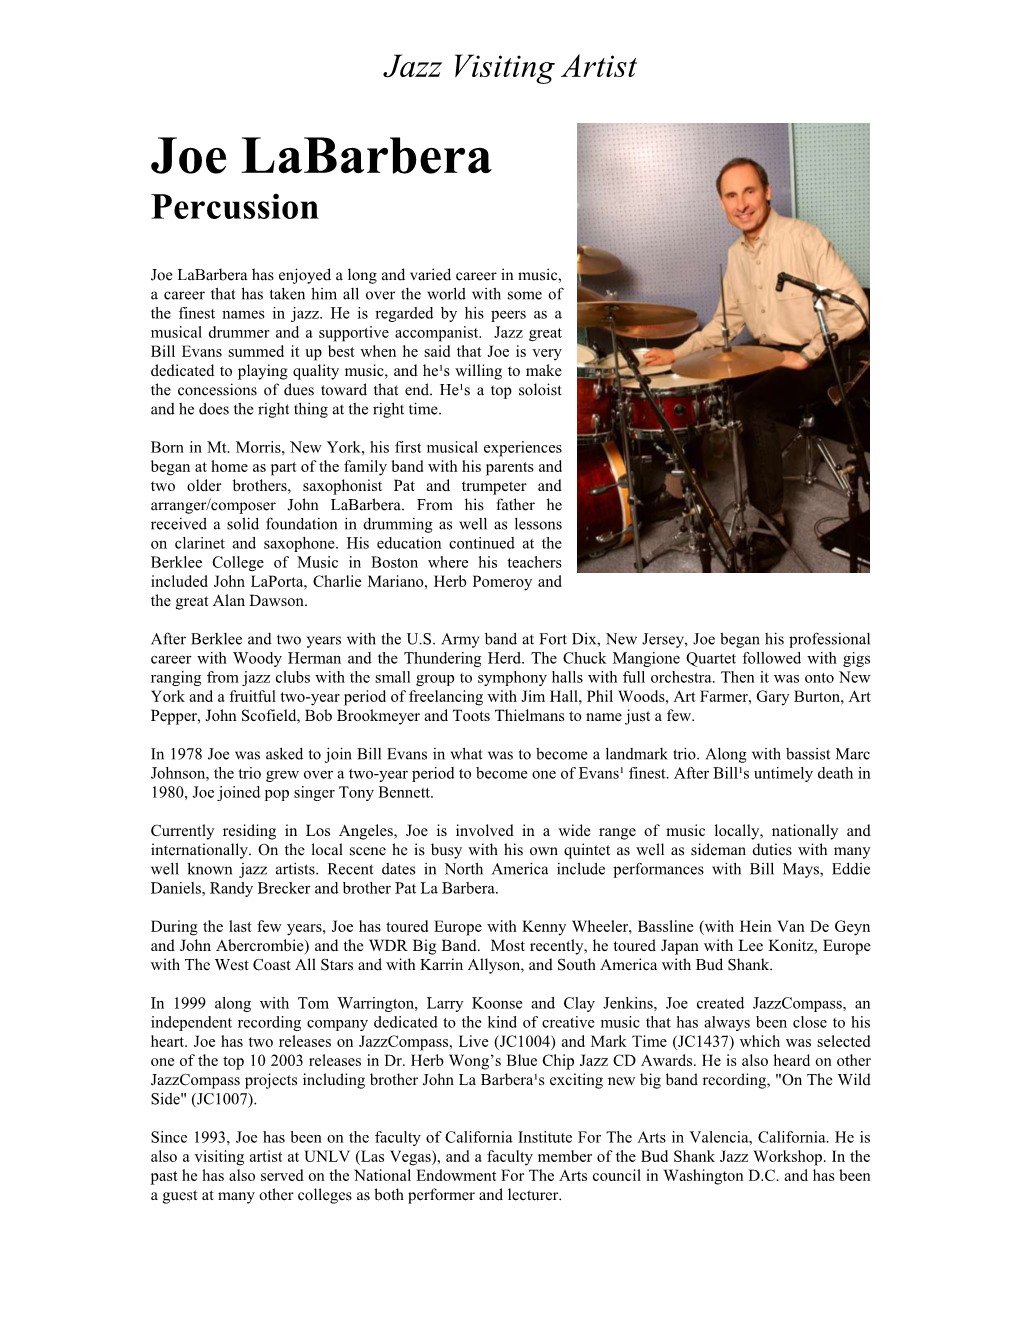 Jazz Visiting Artist: Joe Labarbera, Percussion